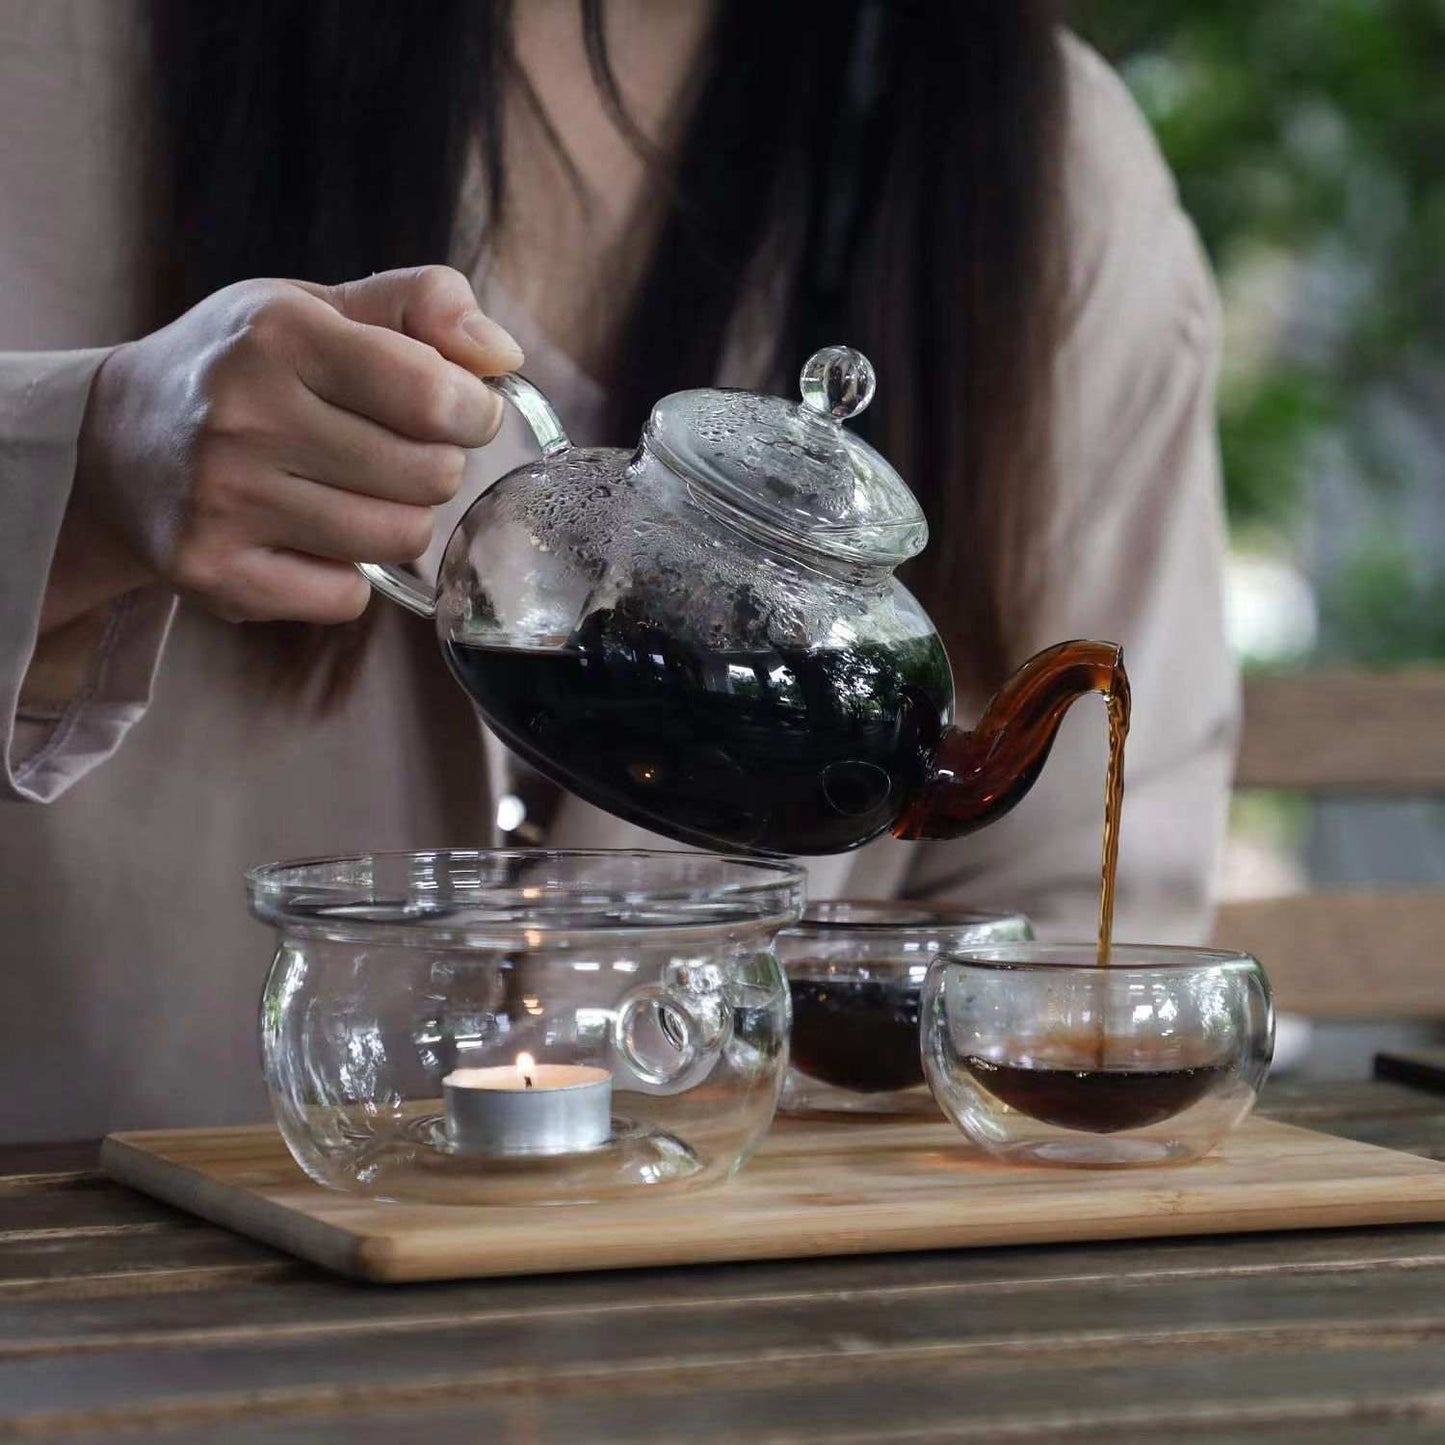 Glas-Teekanne mit Teesieb, Teekanne mit Sieb für losen Tee, hitzebeständige Teekanne aus Borosilikatglas mit herausnehmbarem Teesieb (800 oder 1000 ml)